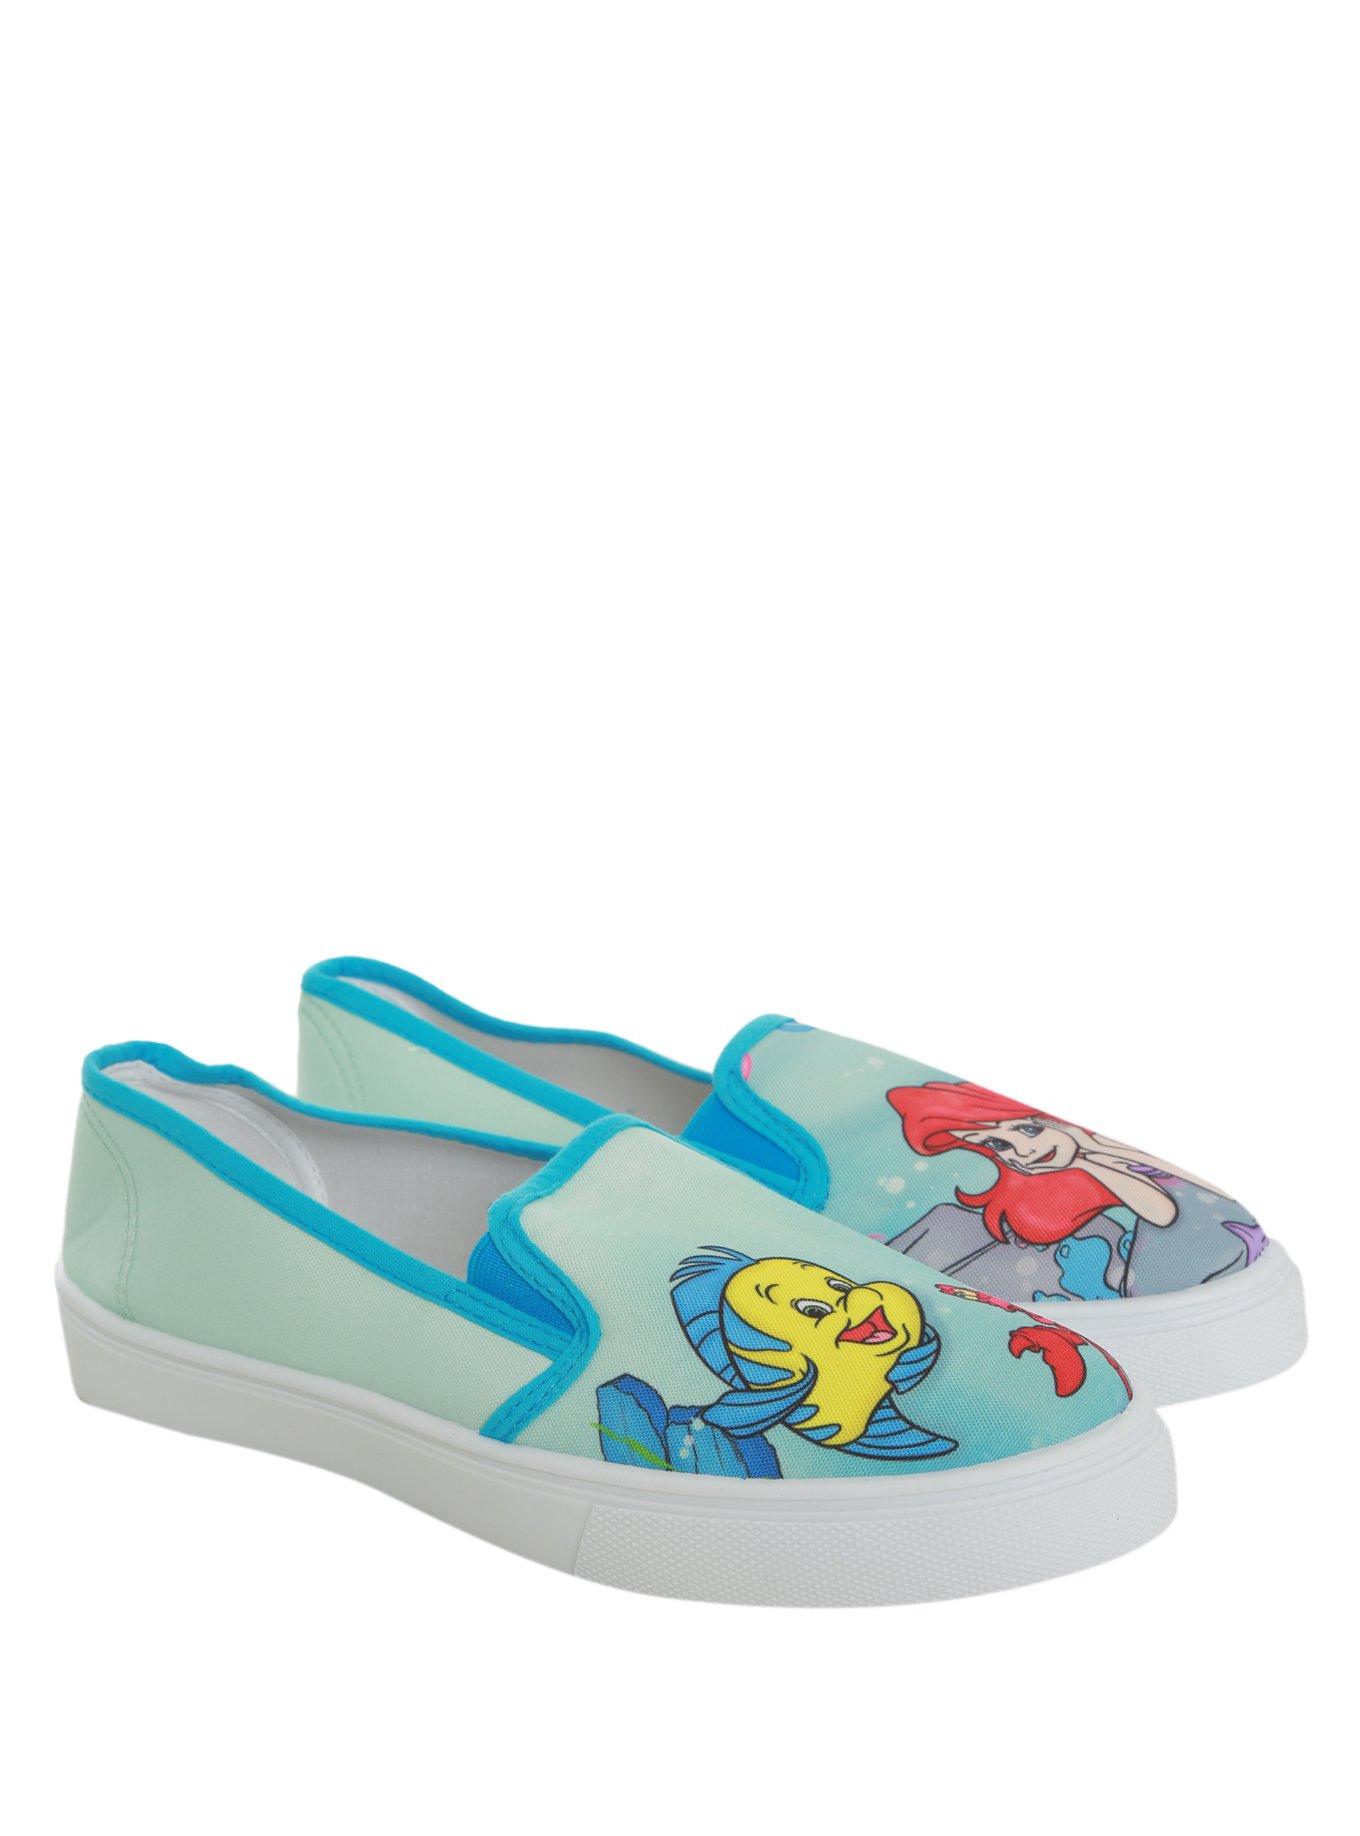 Disney The Little Mermaid Ariel Slip-On Sneakers, LIGHT BLUE, hi-res